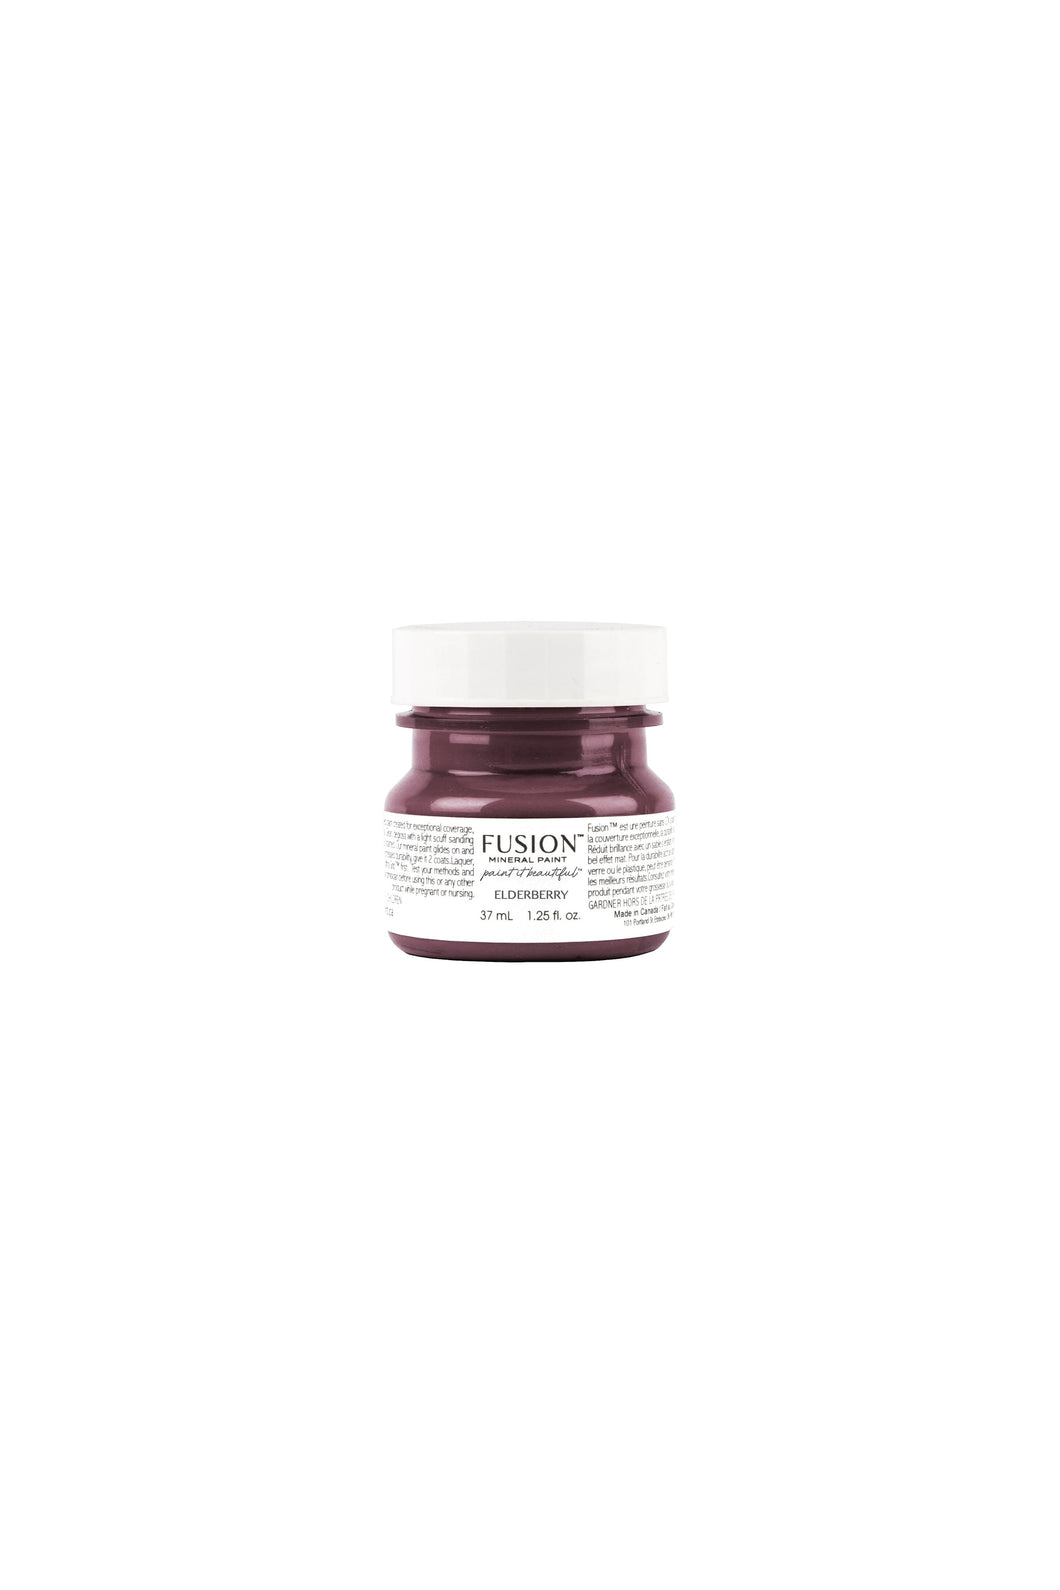 Fusion Mineral Paint - Elderberry 37 ml Jar